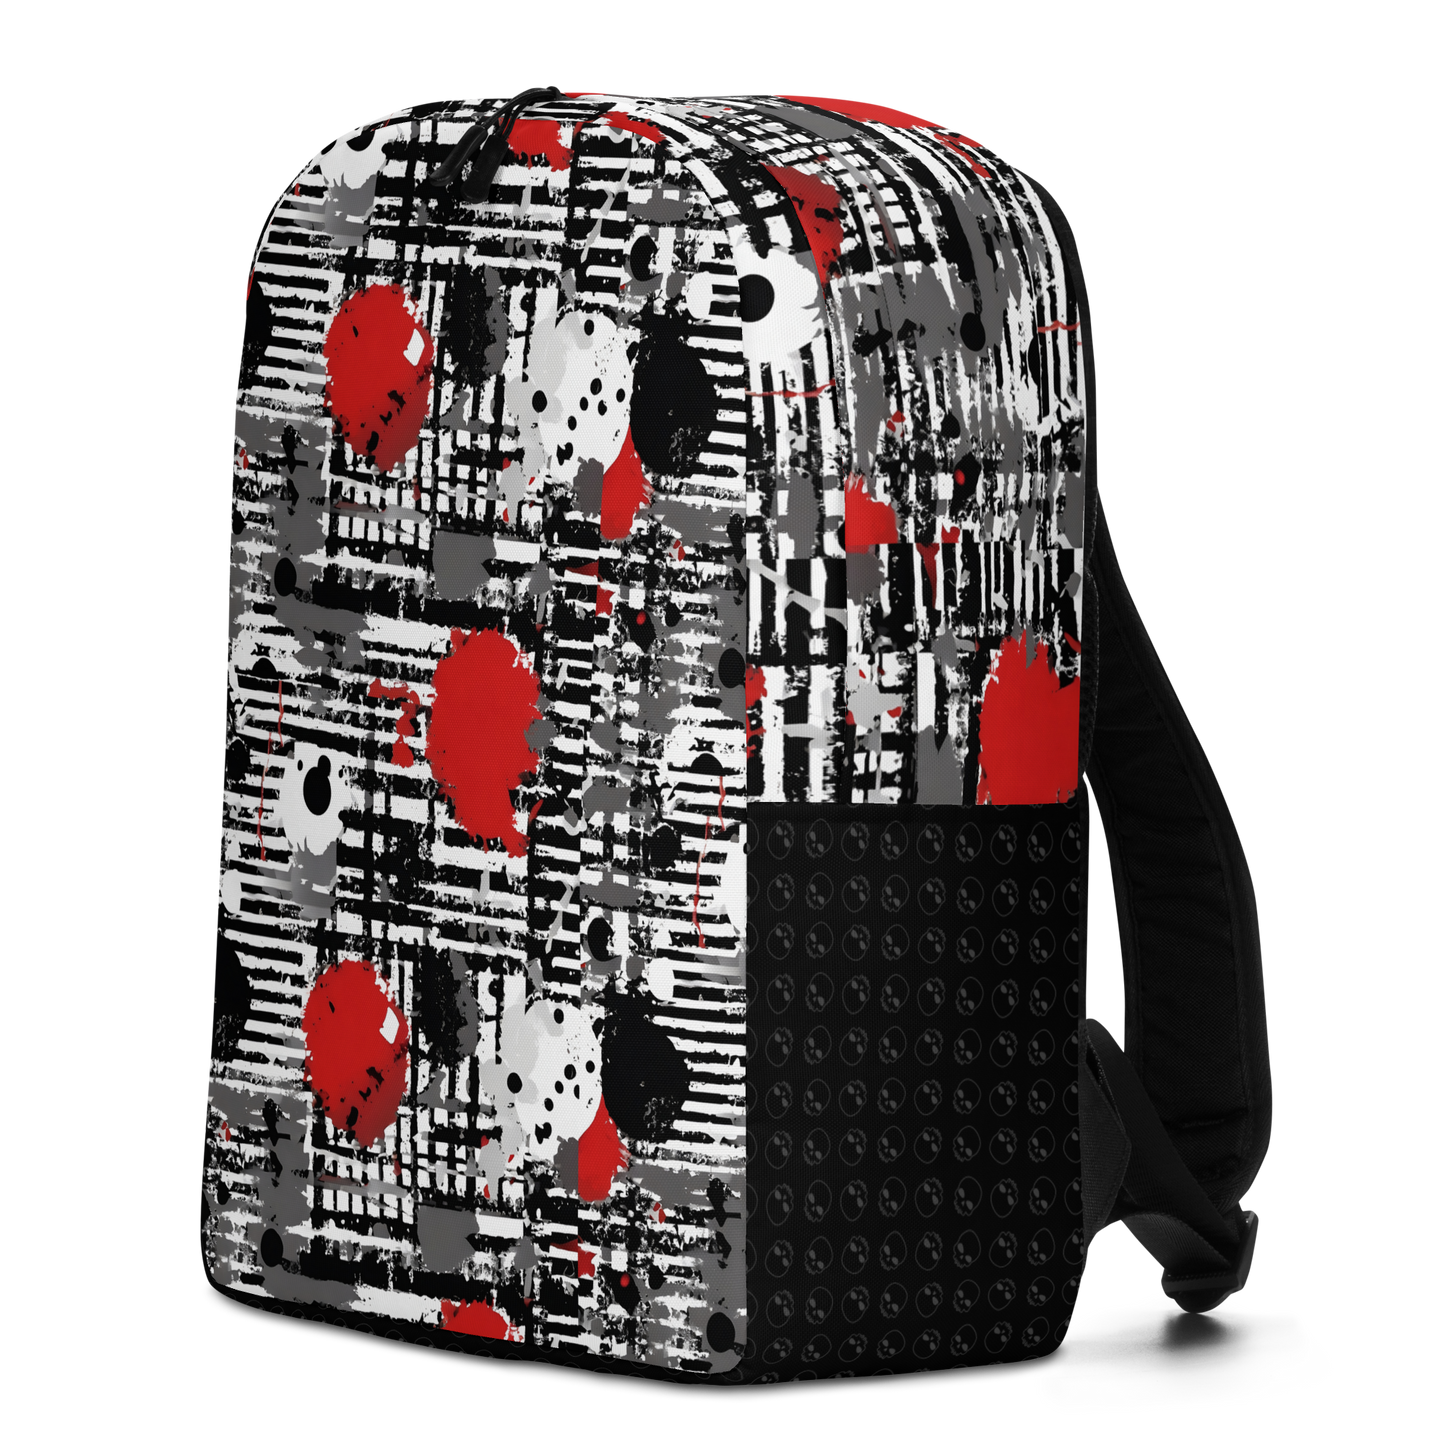 Rebel Contrast Backpack